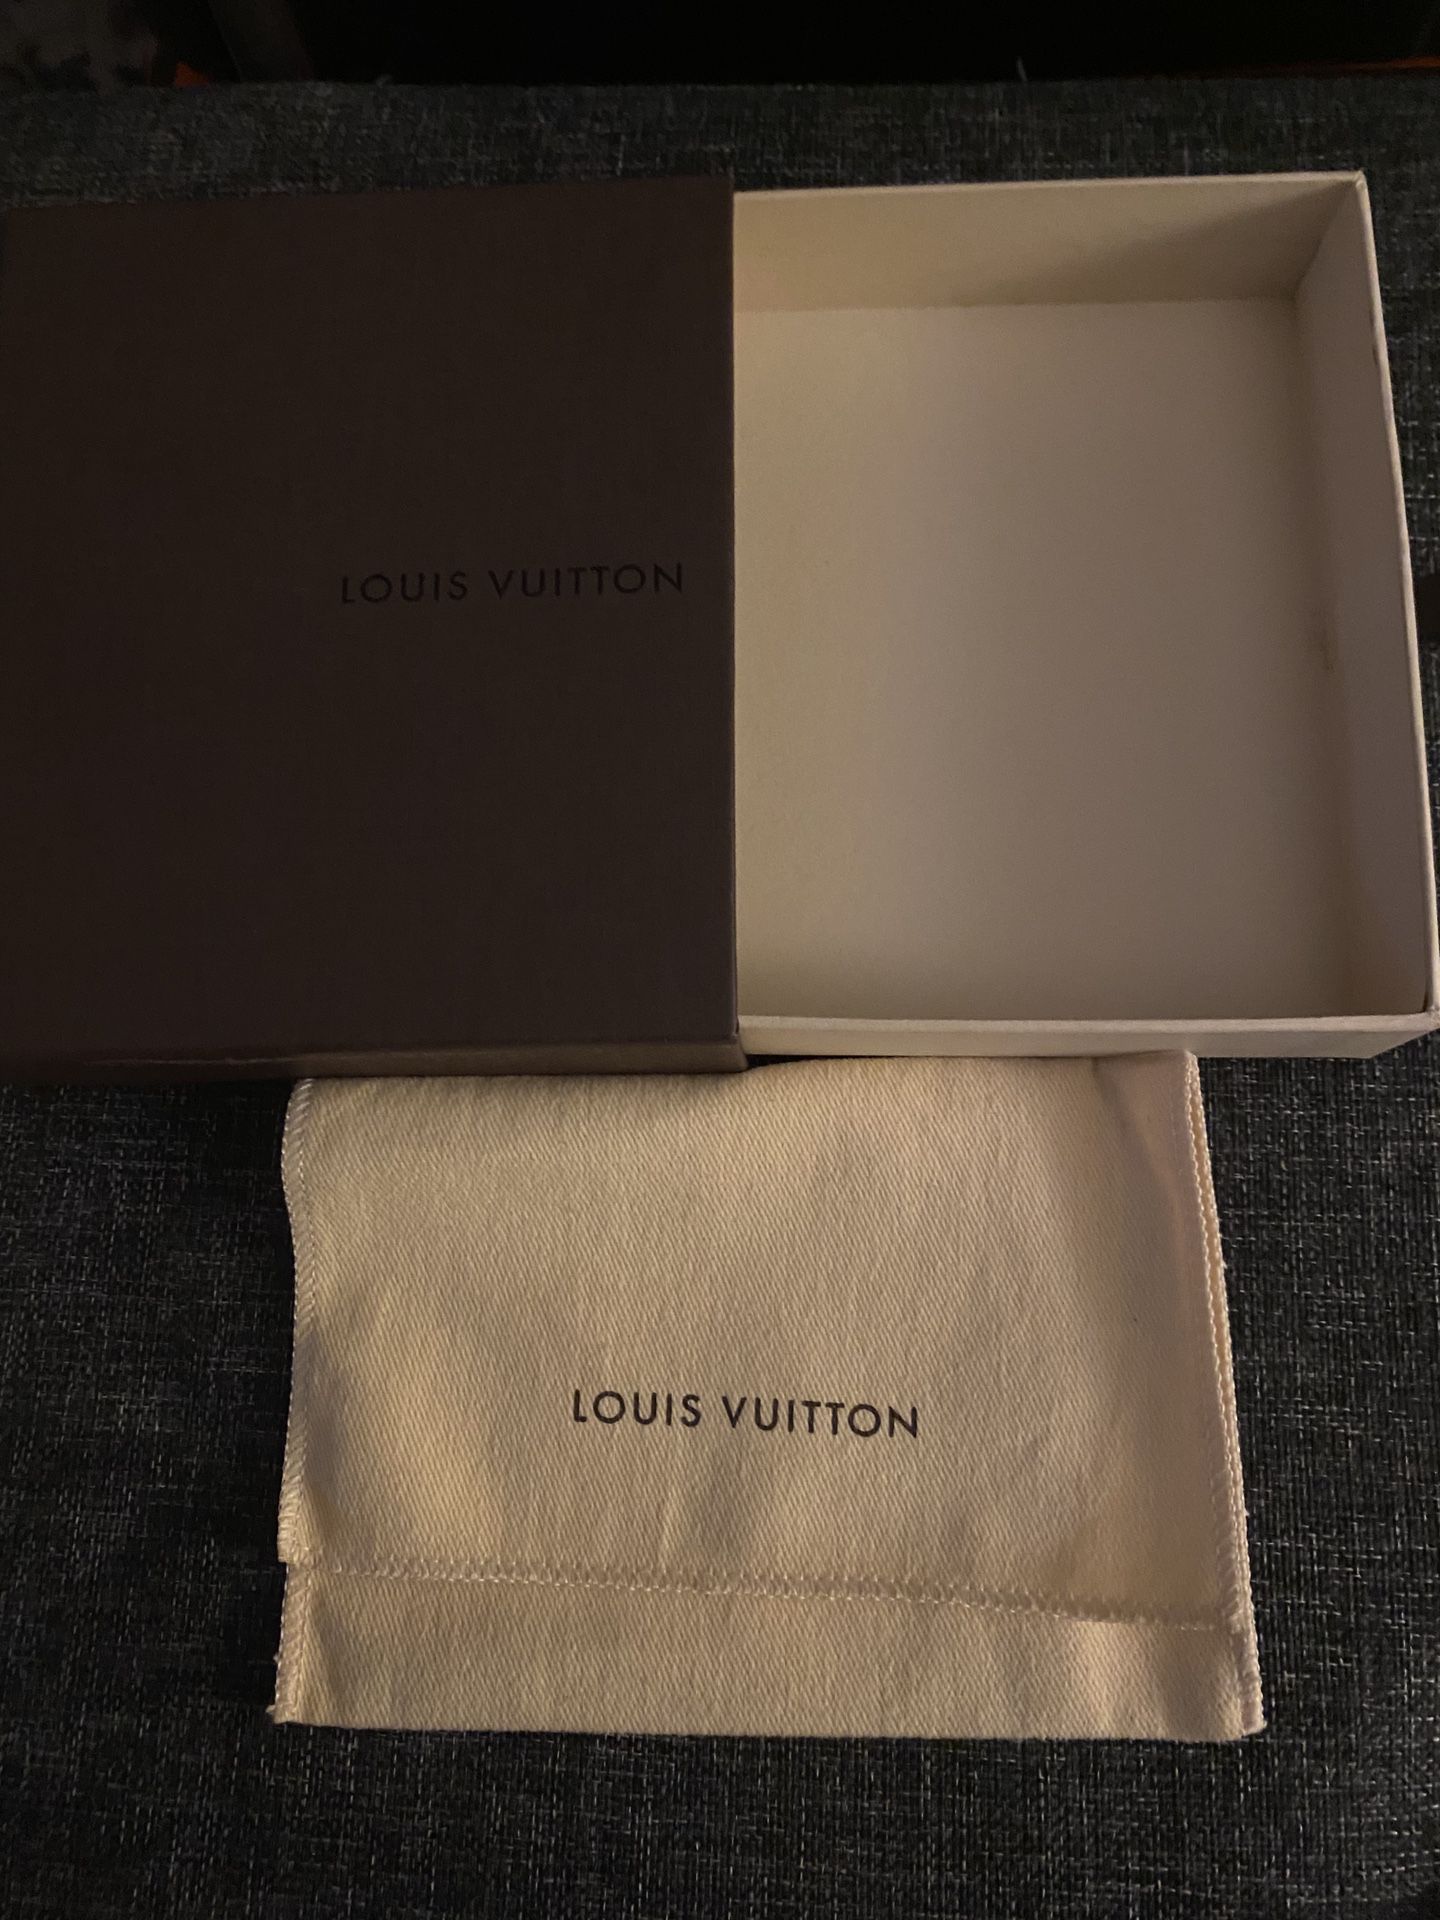 Louis Vuitton wallet box and shopping bag